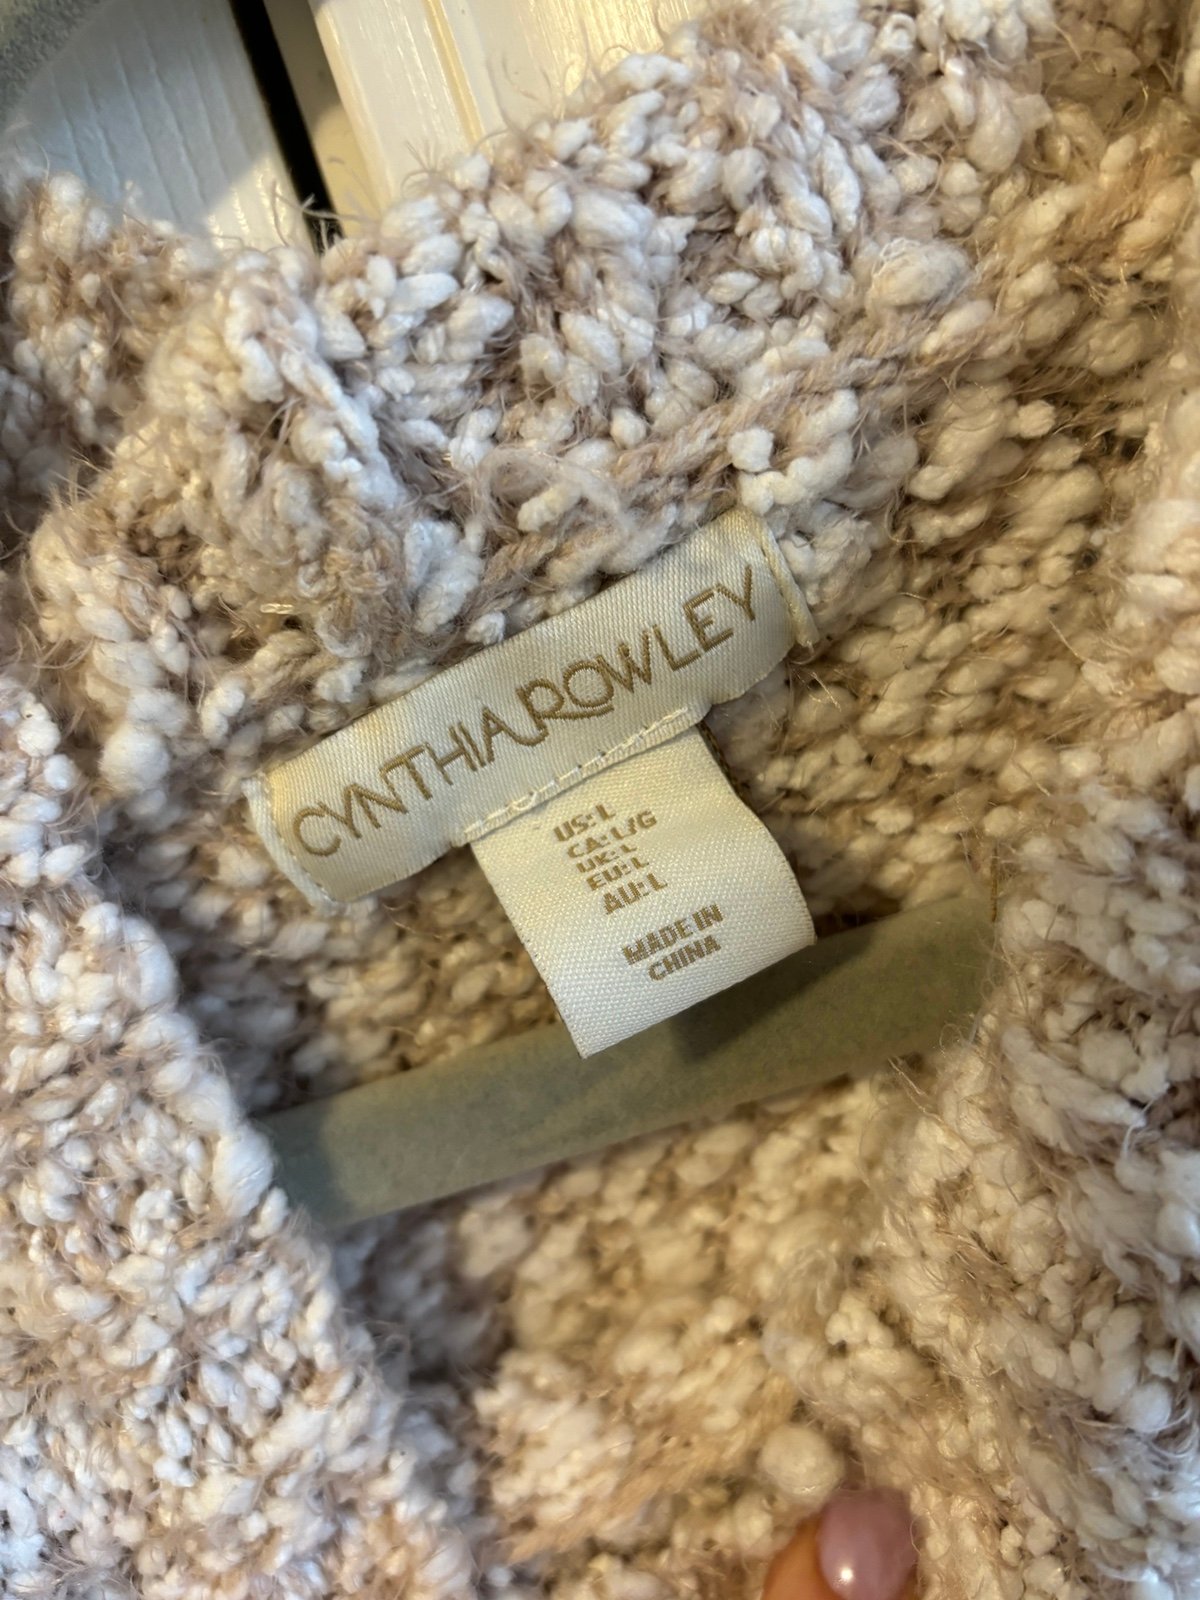 Buy Cynthia rowley sweater itsyeSvGe Low Price